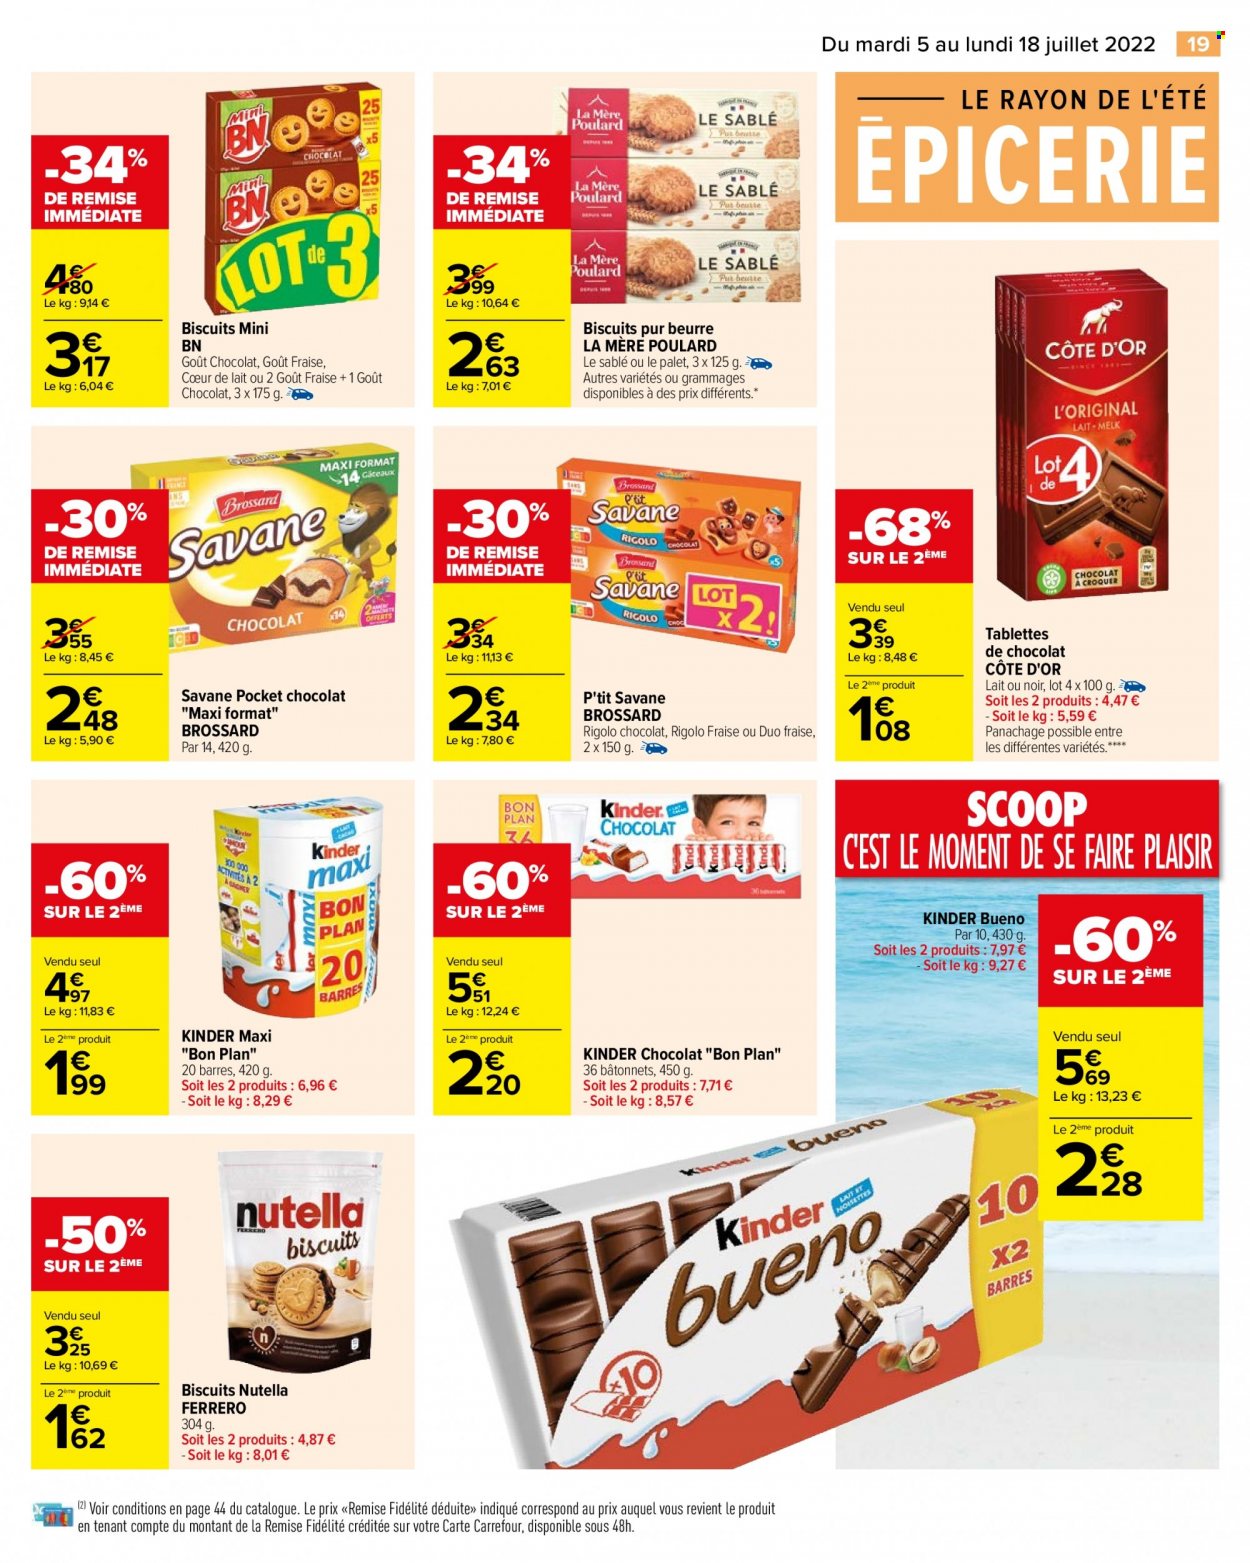 thumbnail - Catalogue Carrefour Hypermarchés - 05/07/2022 - 18/07/2022 - Produits soldés - biscuits, Nutella, Kinder, Kinder Bueno, Côte d'Or, Brossard, Kinder Maxi. Page 21.